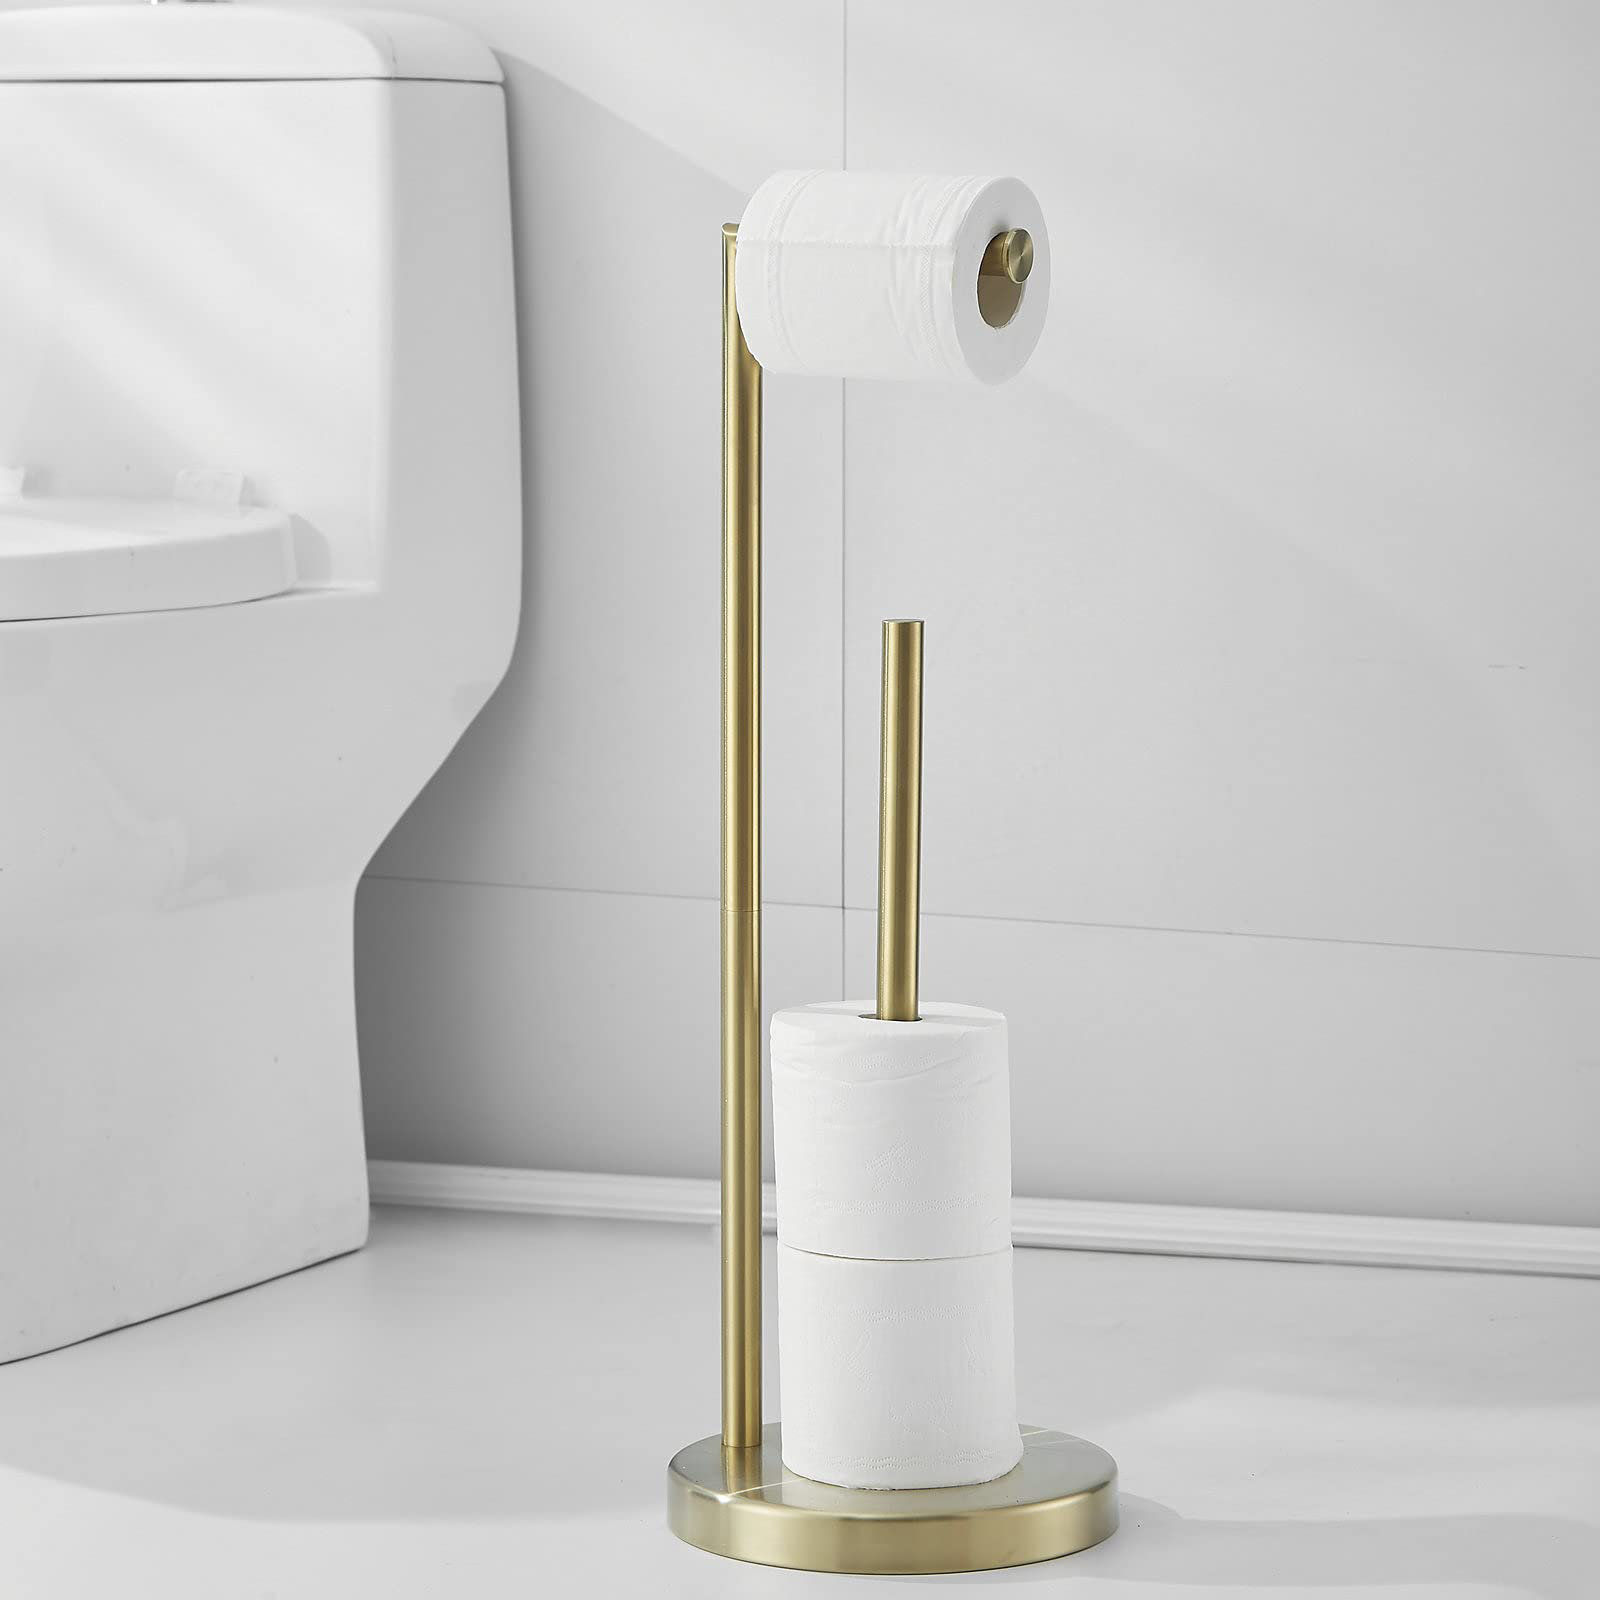 VIBRANTBATH Freestanding Toilet Paper Holder & Reviews